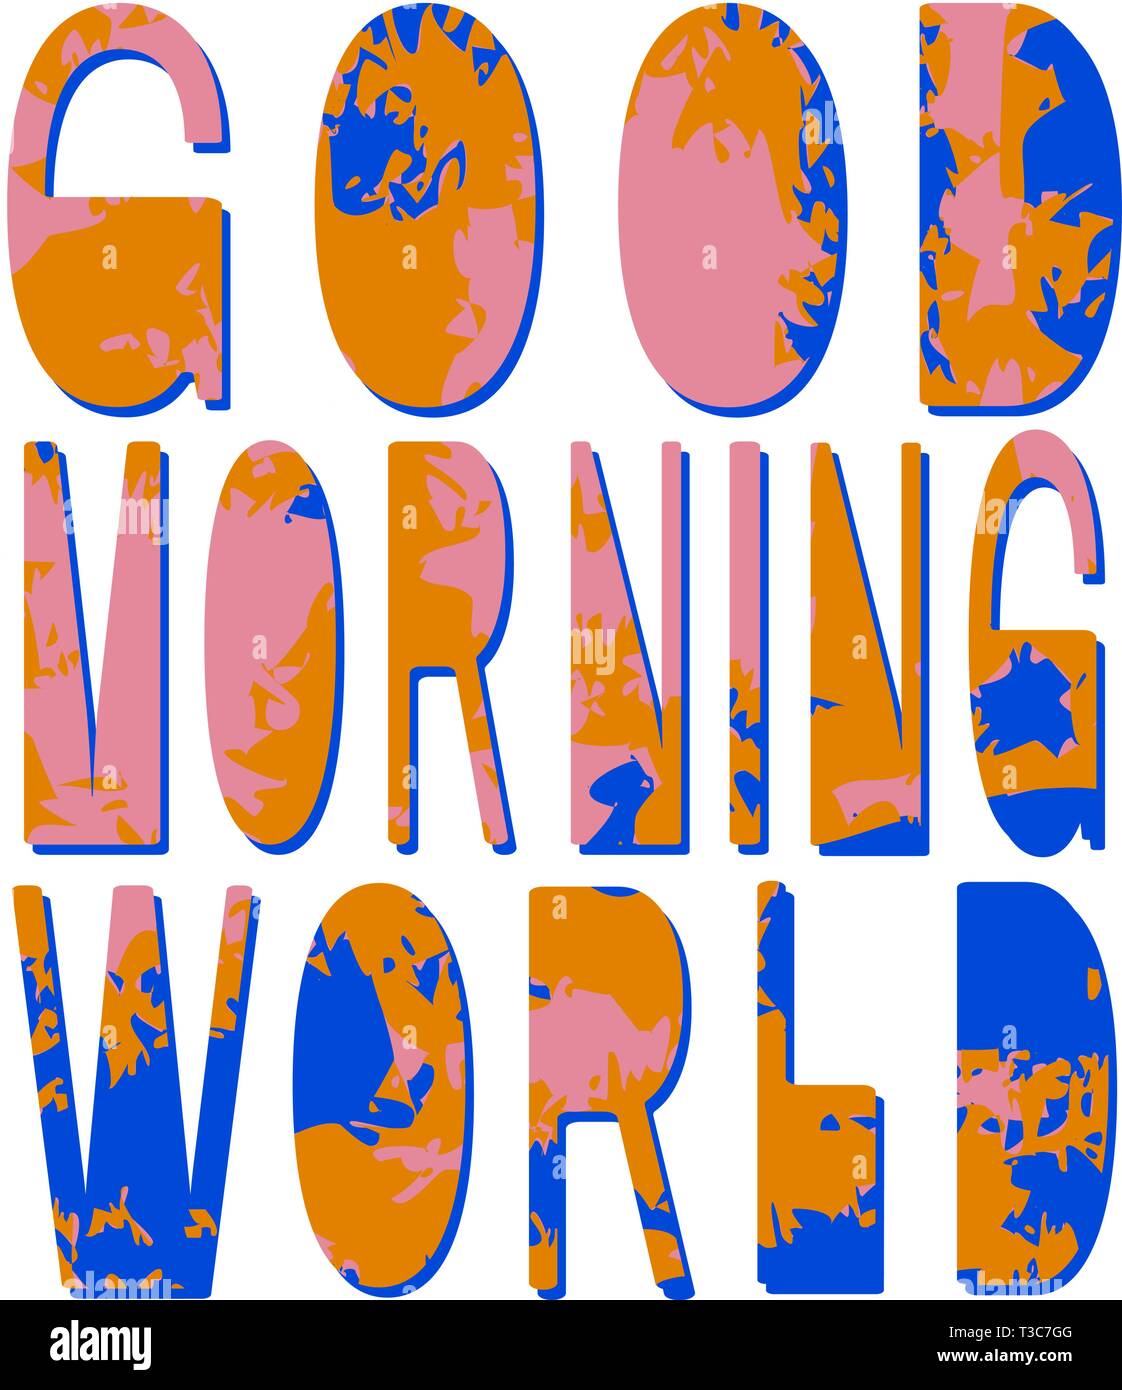 Good Morning World - Inschrift. Farbige Inschrift, 3 Farben. Handzeichnung, Isolieren, Beschriftung, Typografie, Schriftbearbeitung. Für Poster, Karten. Stock Vektor